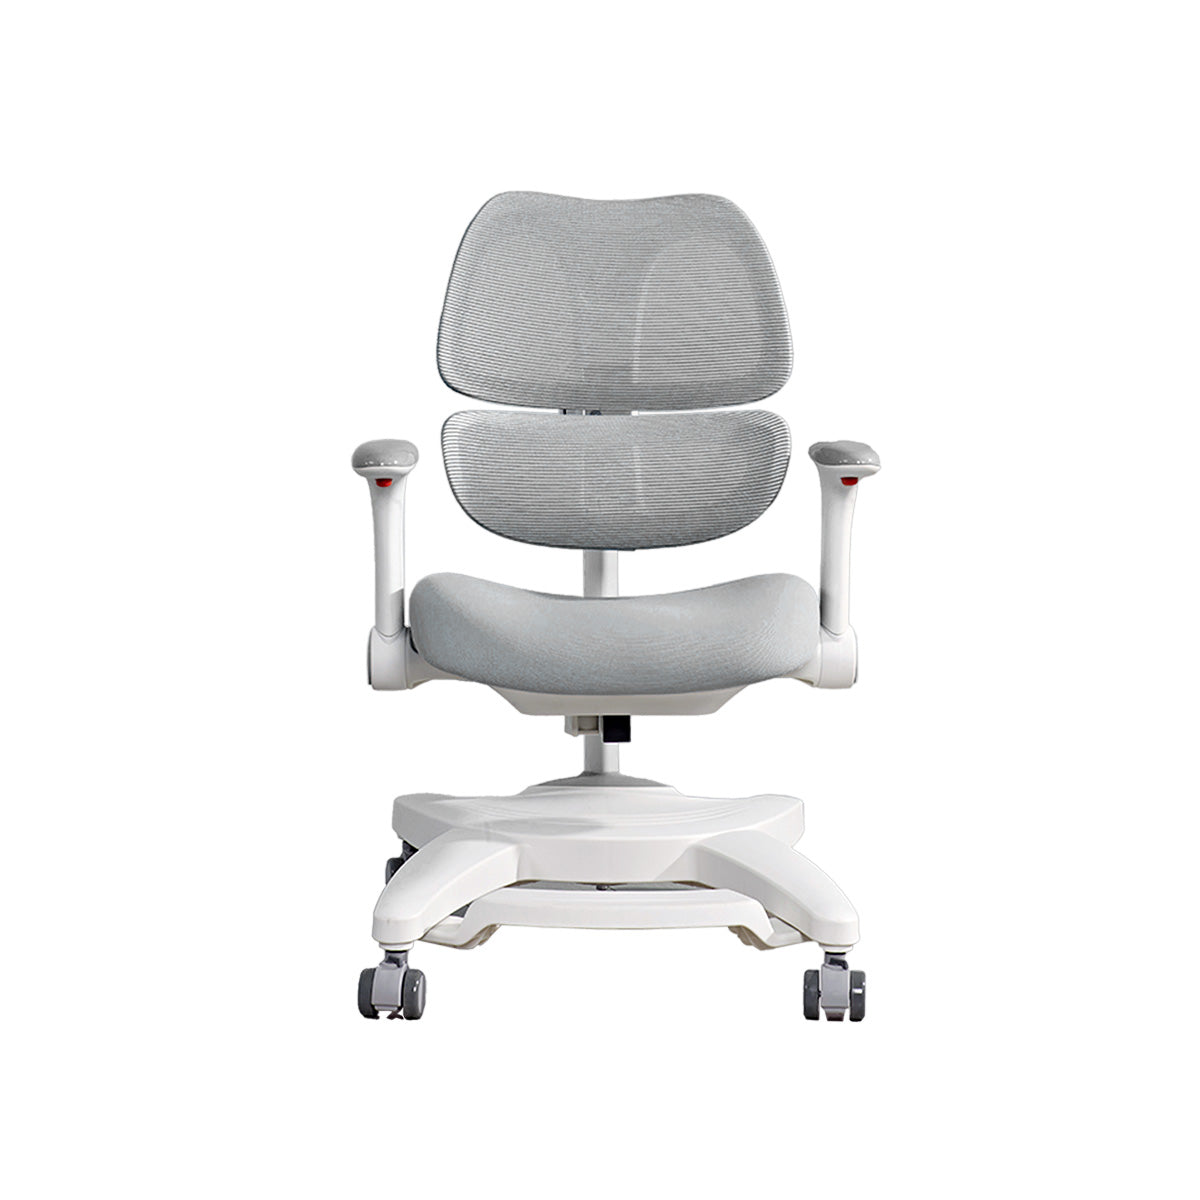 IMPACT Kids Ergonomic Chair With Arm Rest, Grey